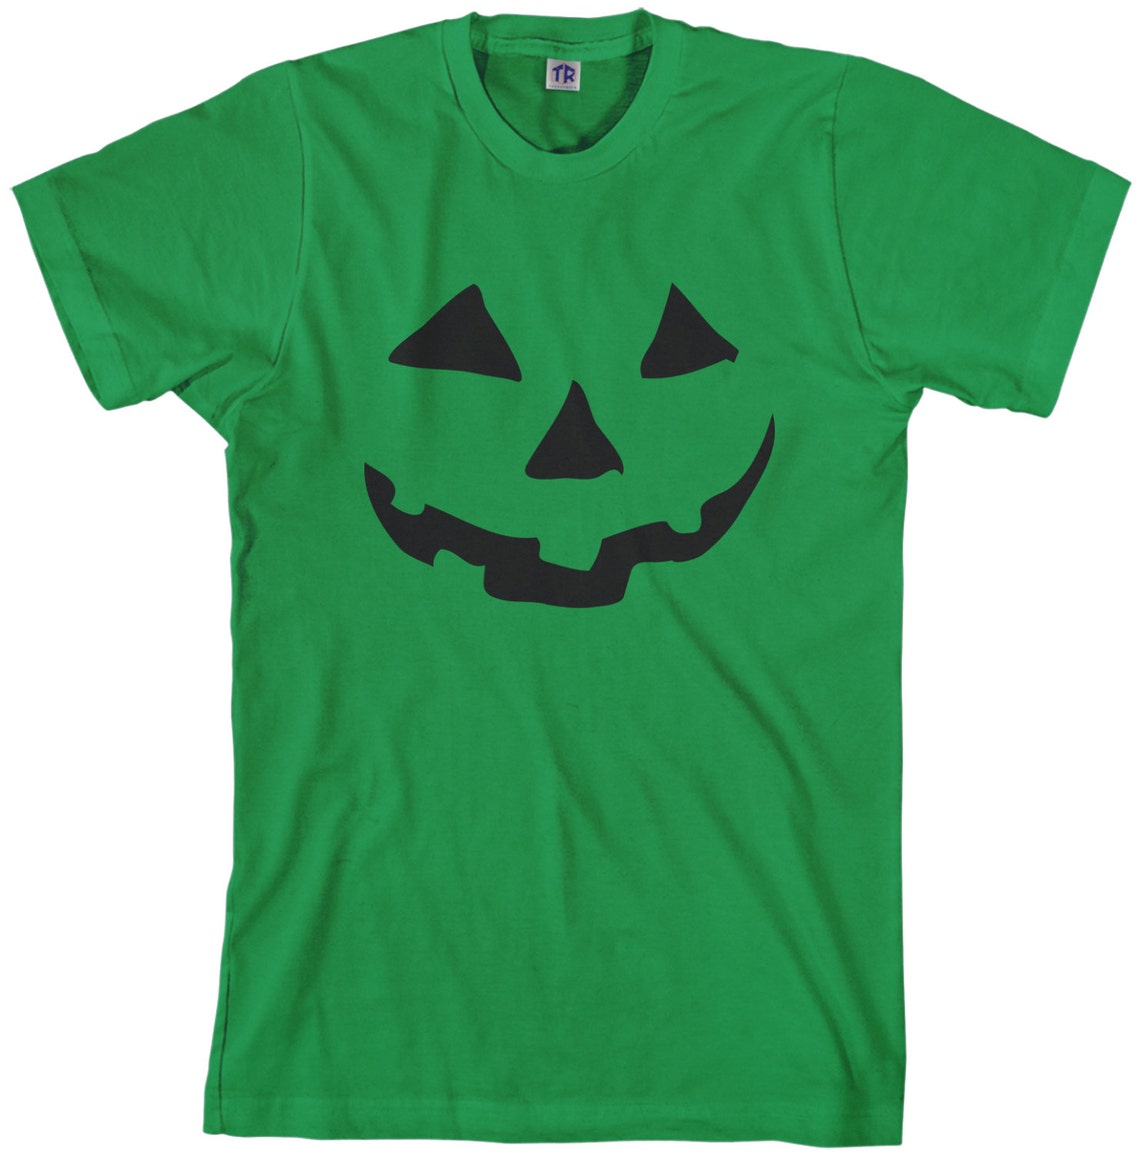 Halloween Pumpkin Face Men's T-shirt Jack O Lantern Funny - Etsy